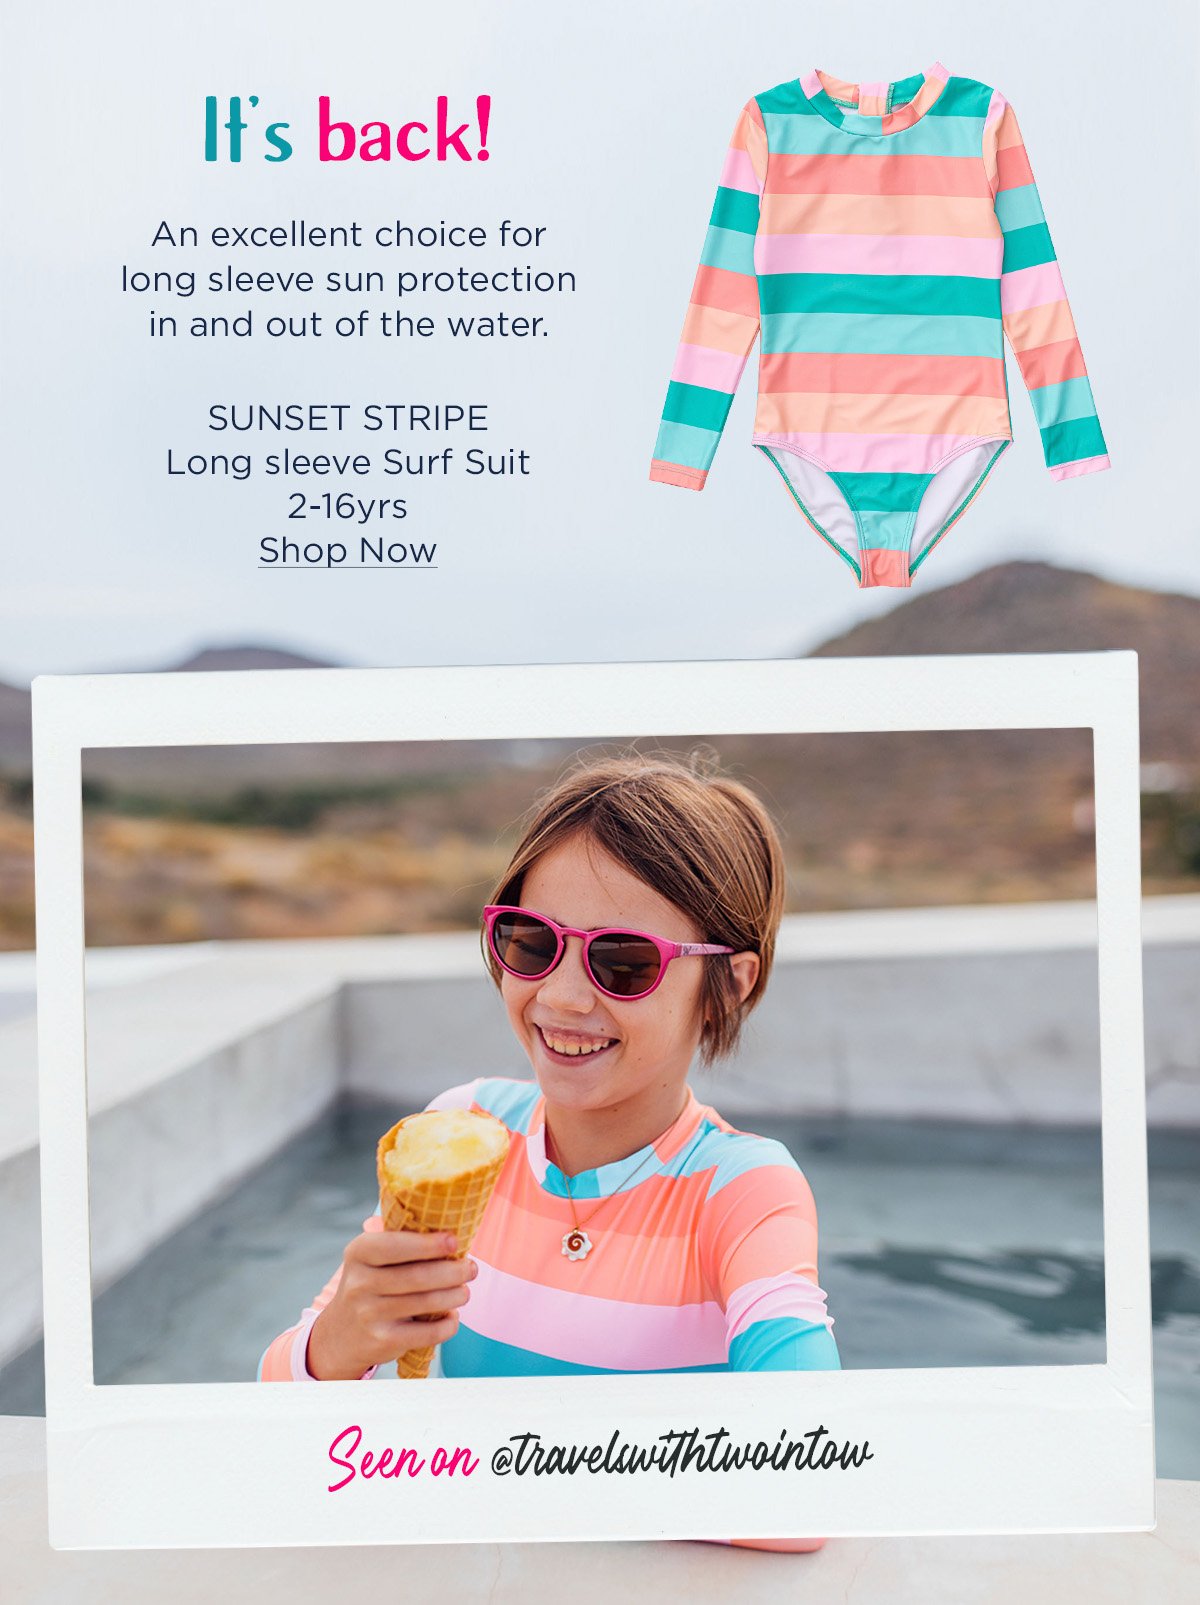 Sunset Stripe Long Sleeve Surf Suit.